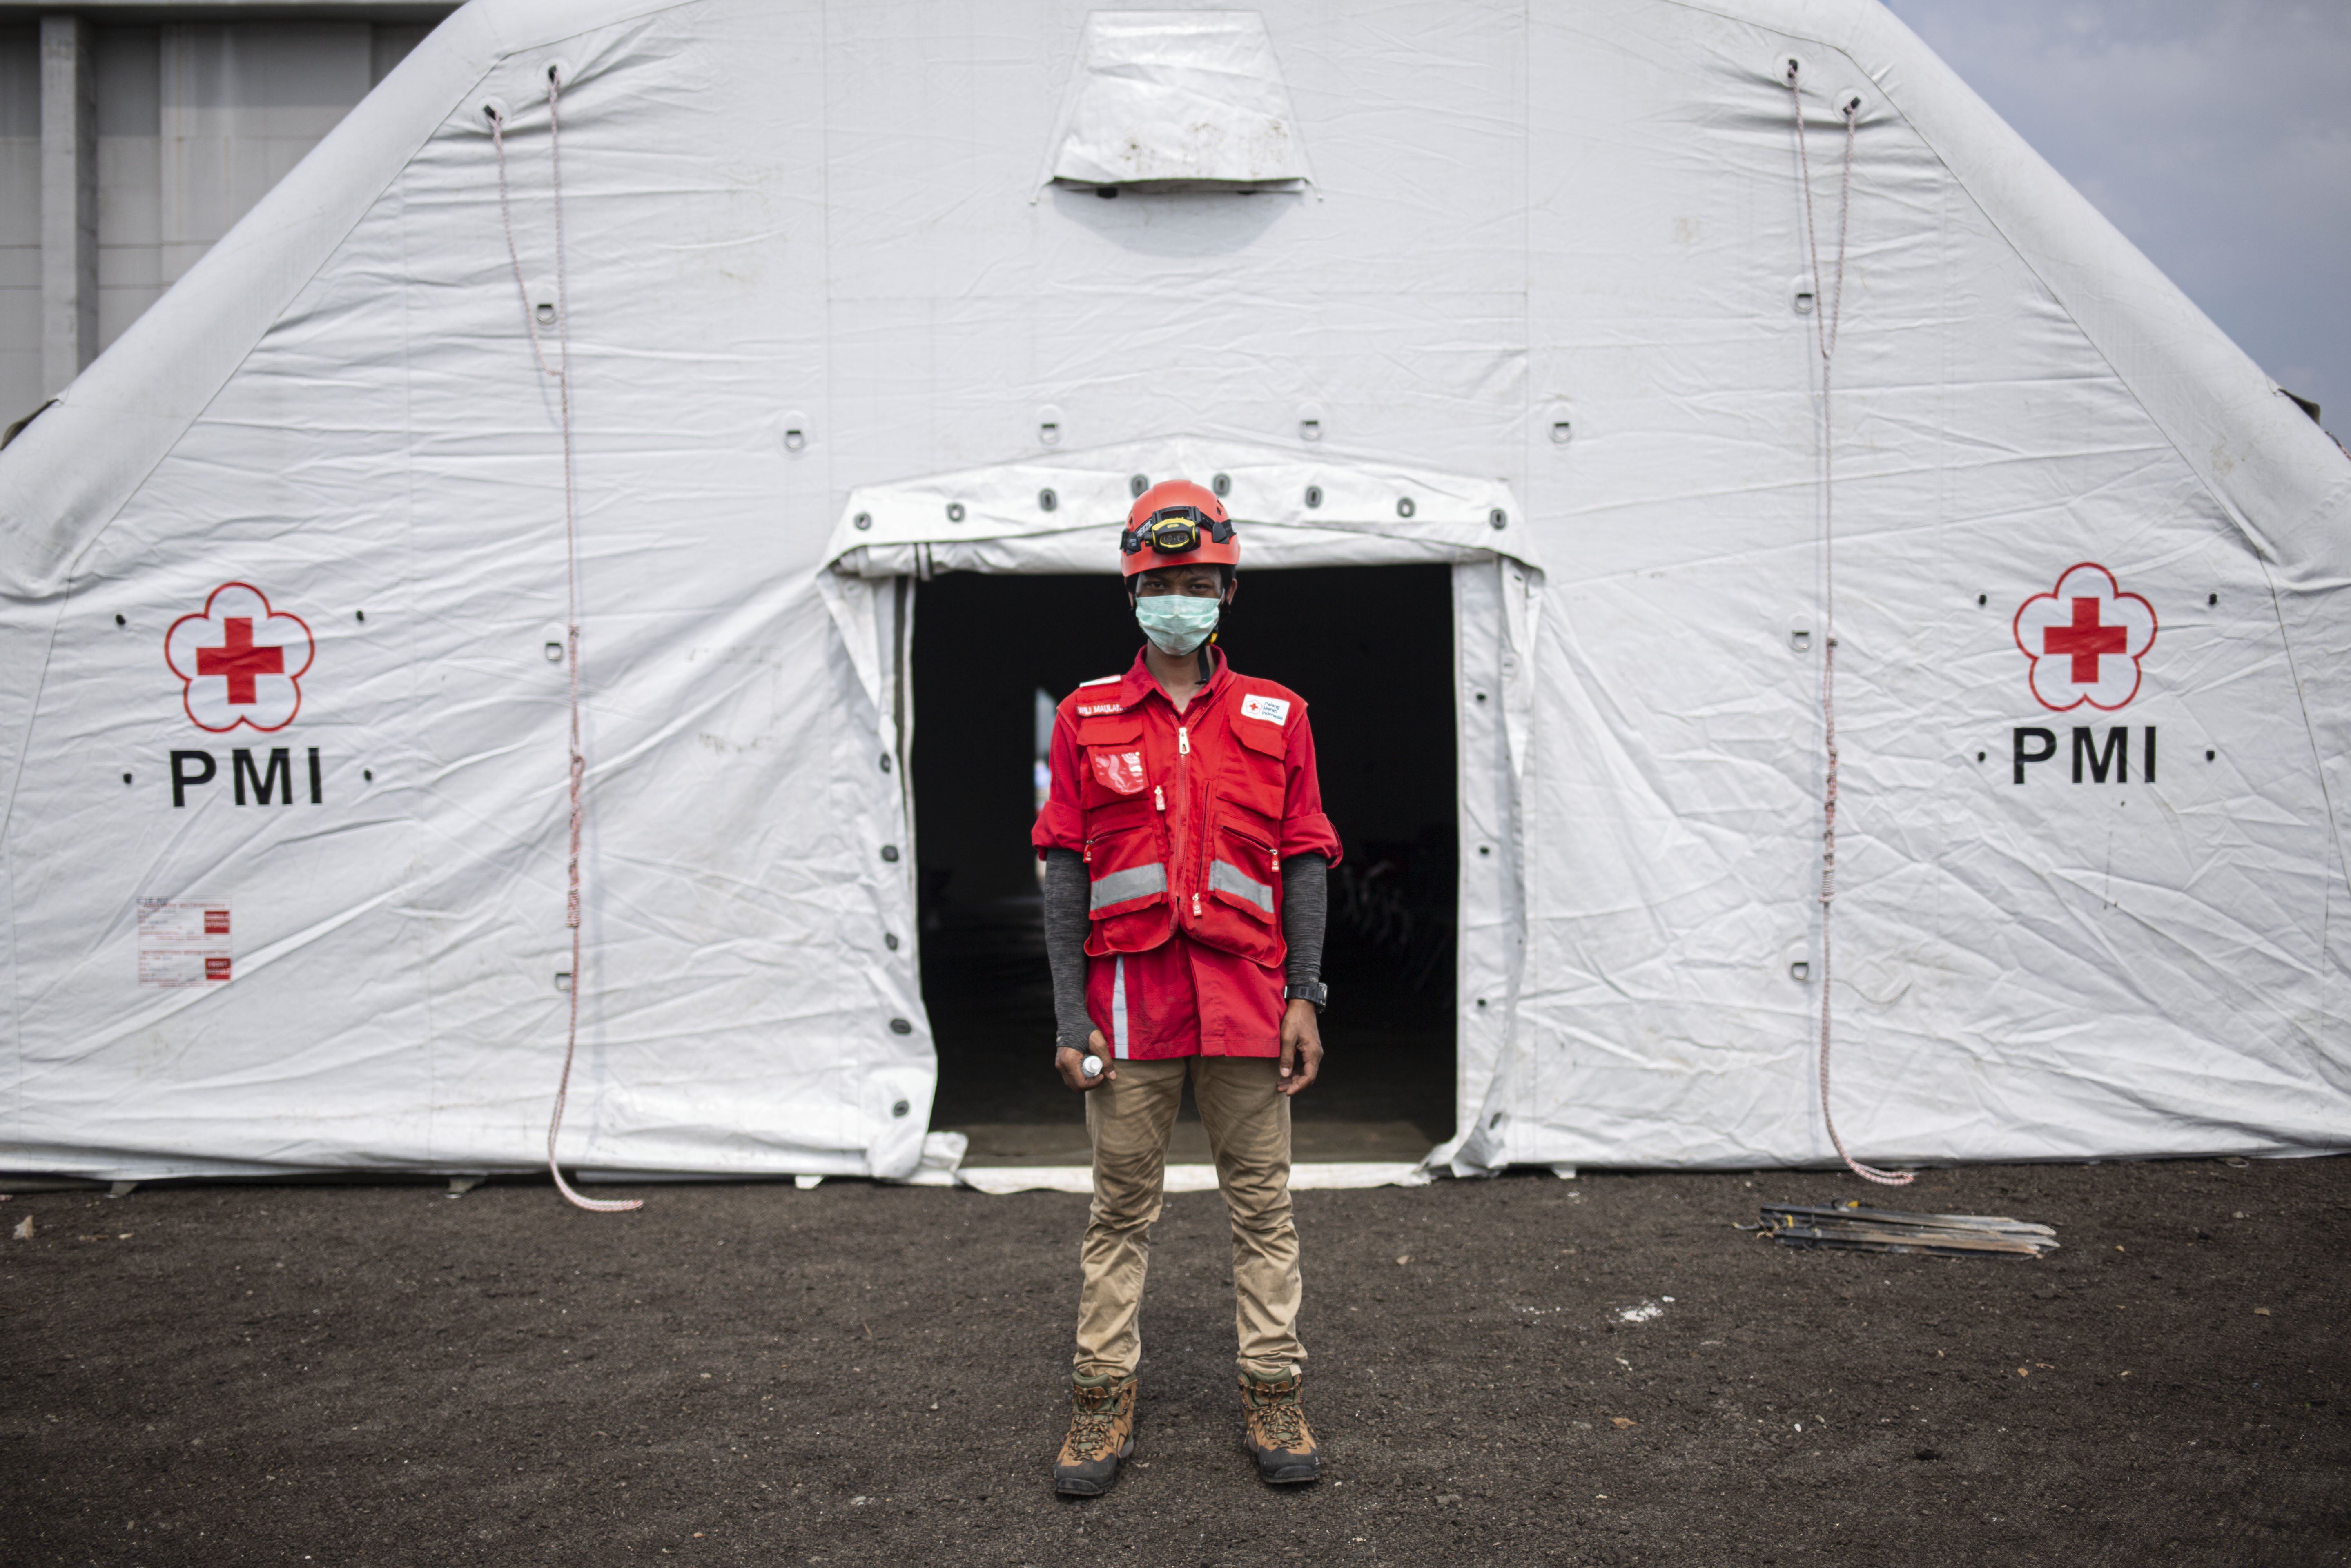 Willy Maulana (23), merupakan salah satu petugas dari Palang Merah Indonesia (PMI) yang tengah menyiapkan gudang logistik bagi penanganan virus Covid-19 di Jalan Gatot Subroto, Jakarta Selatan.